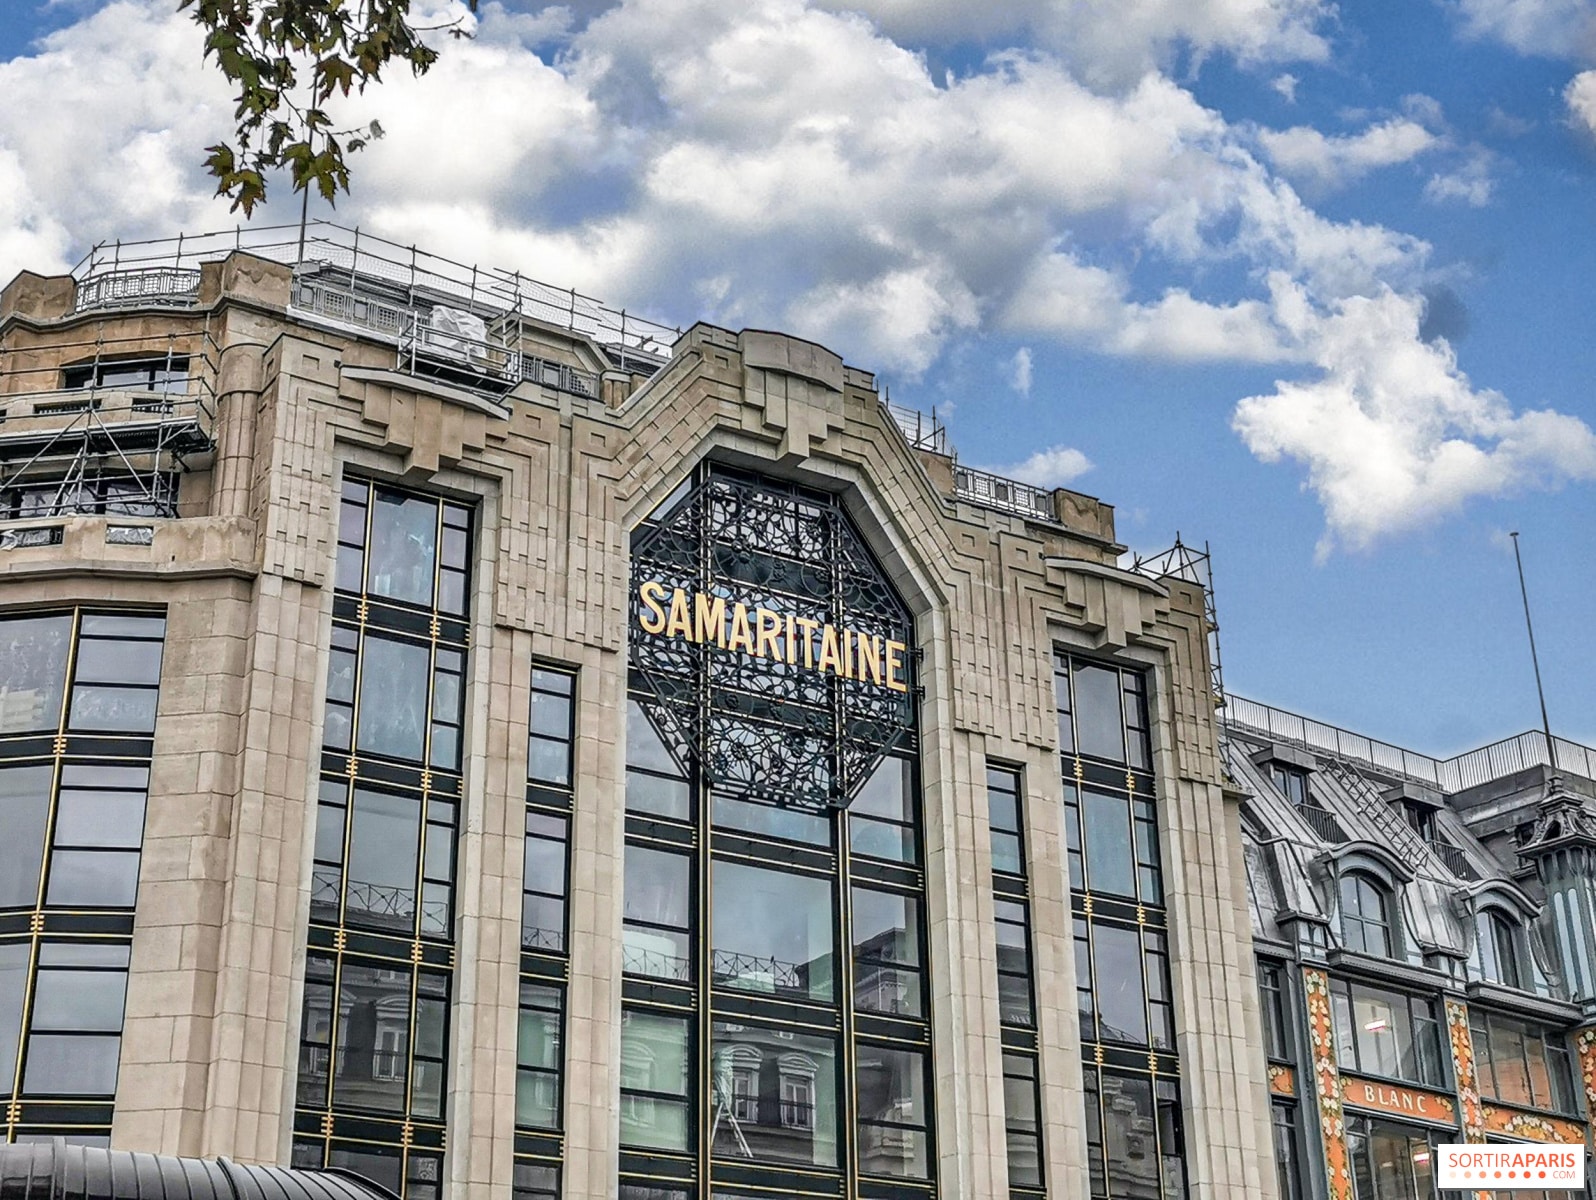 Legendary Paris department store La Samaritaine reopens